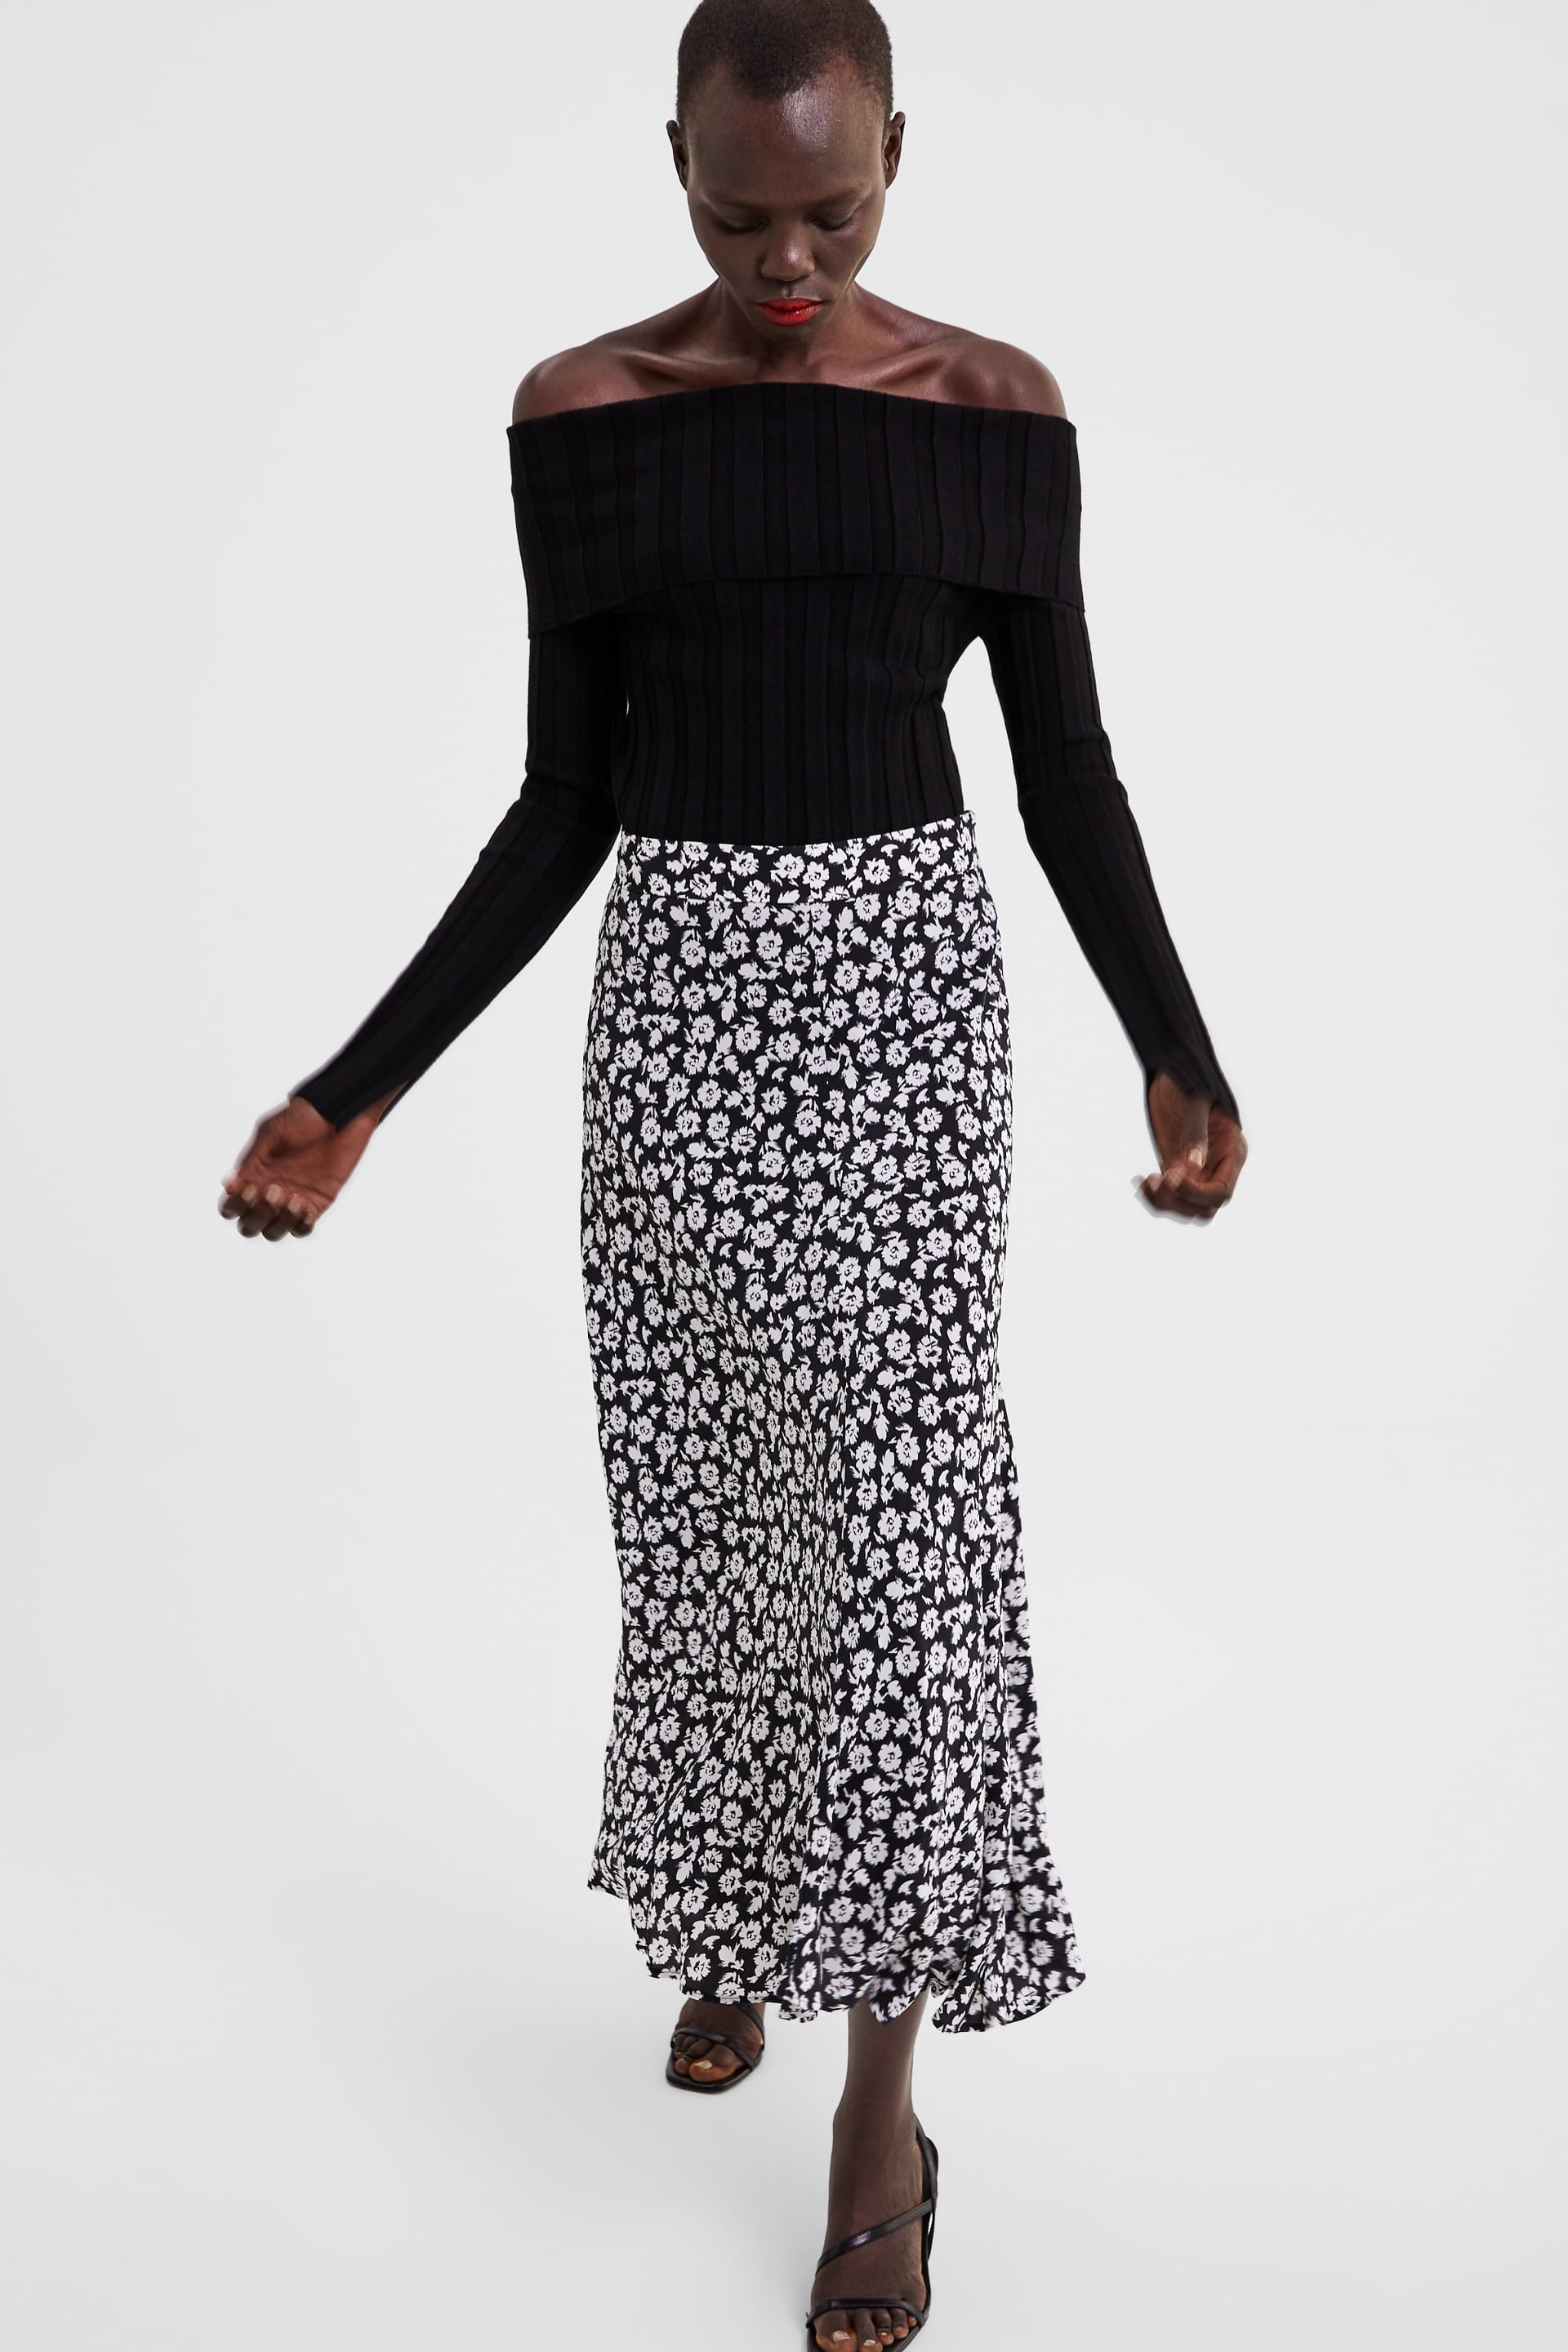 Zara Floral Print Skirt | The 12 Best 